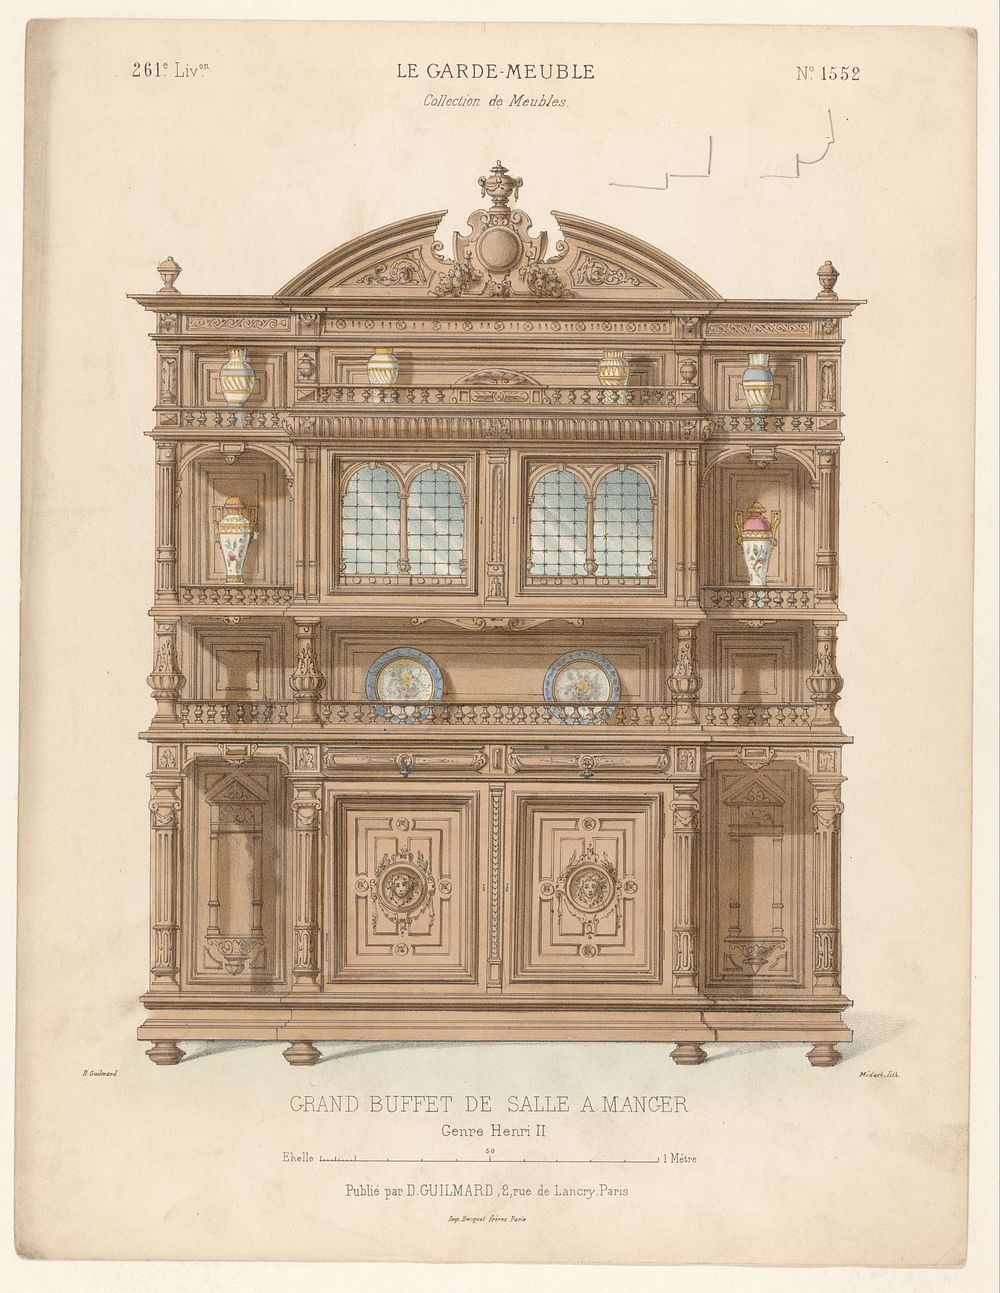 Buffetkast (1845 - 1862) by Midart, Becquet frères and Désiré Guilmard